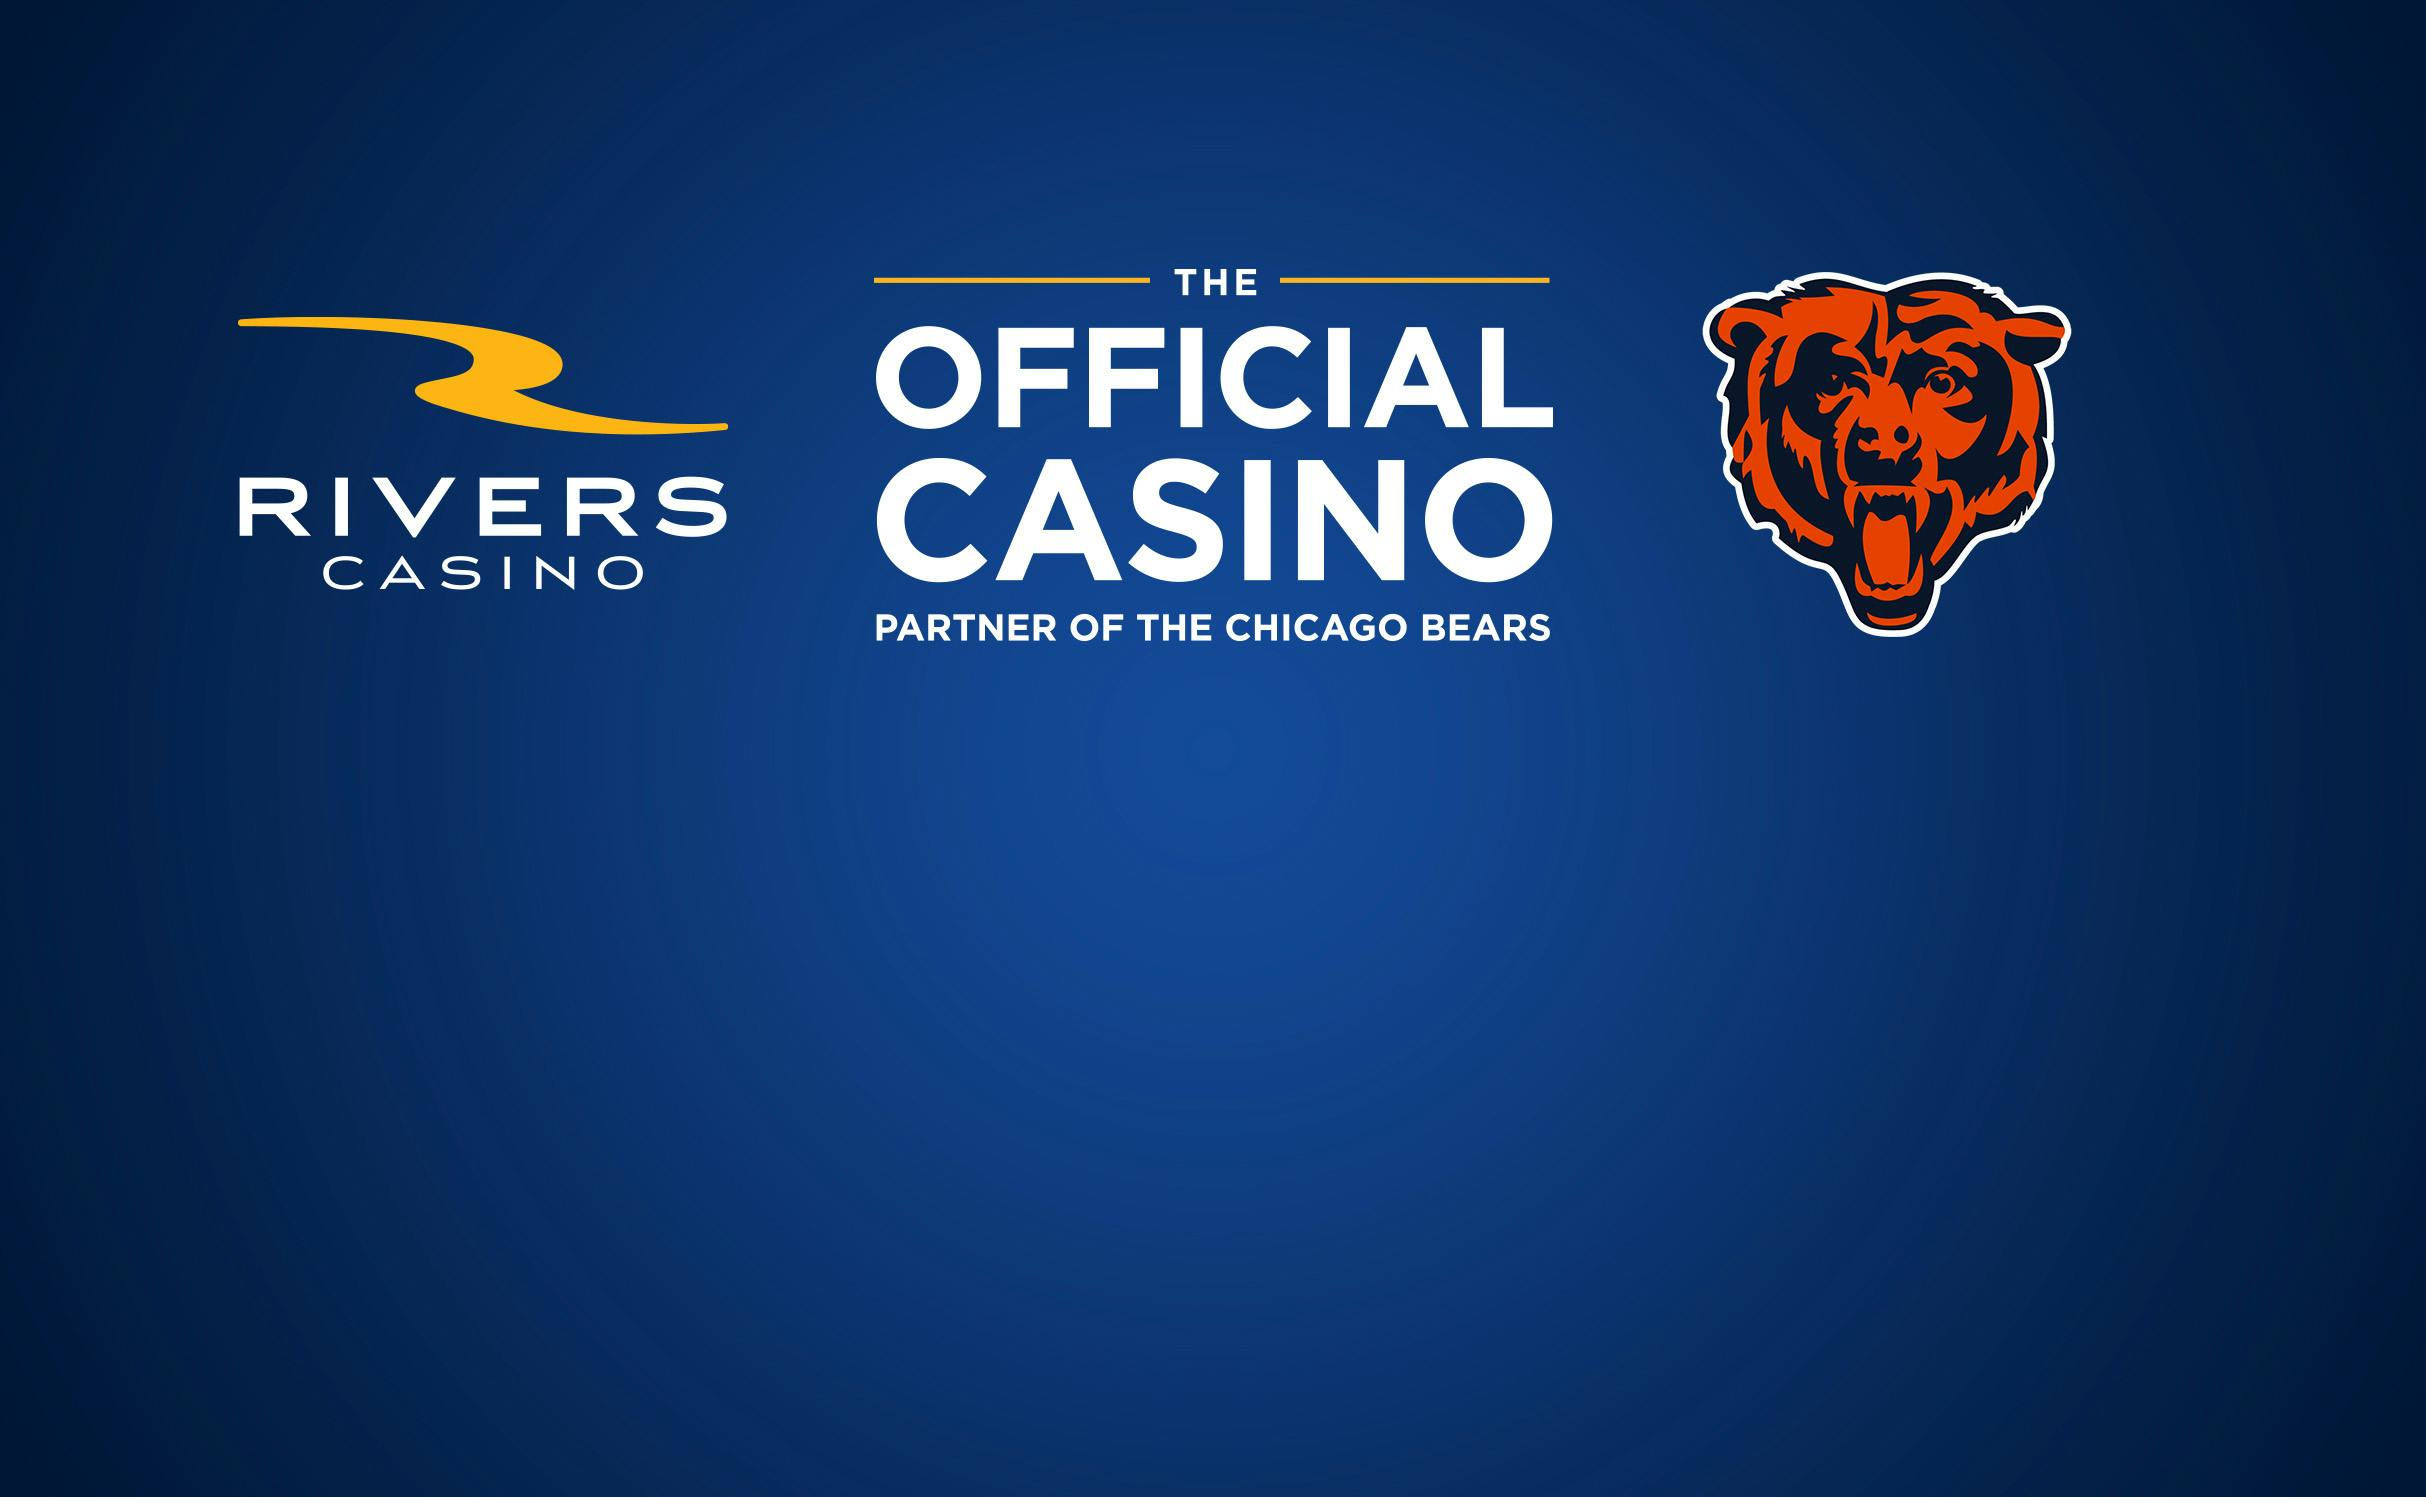 Press Release: Chicago Bears Partnership